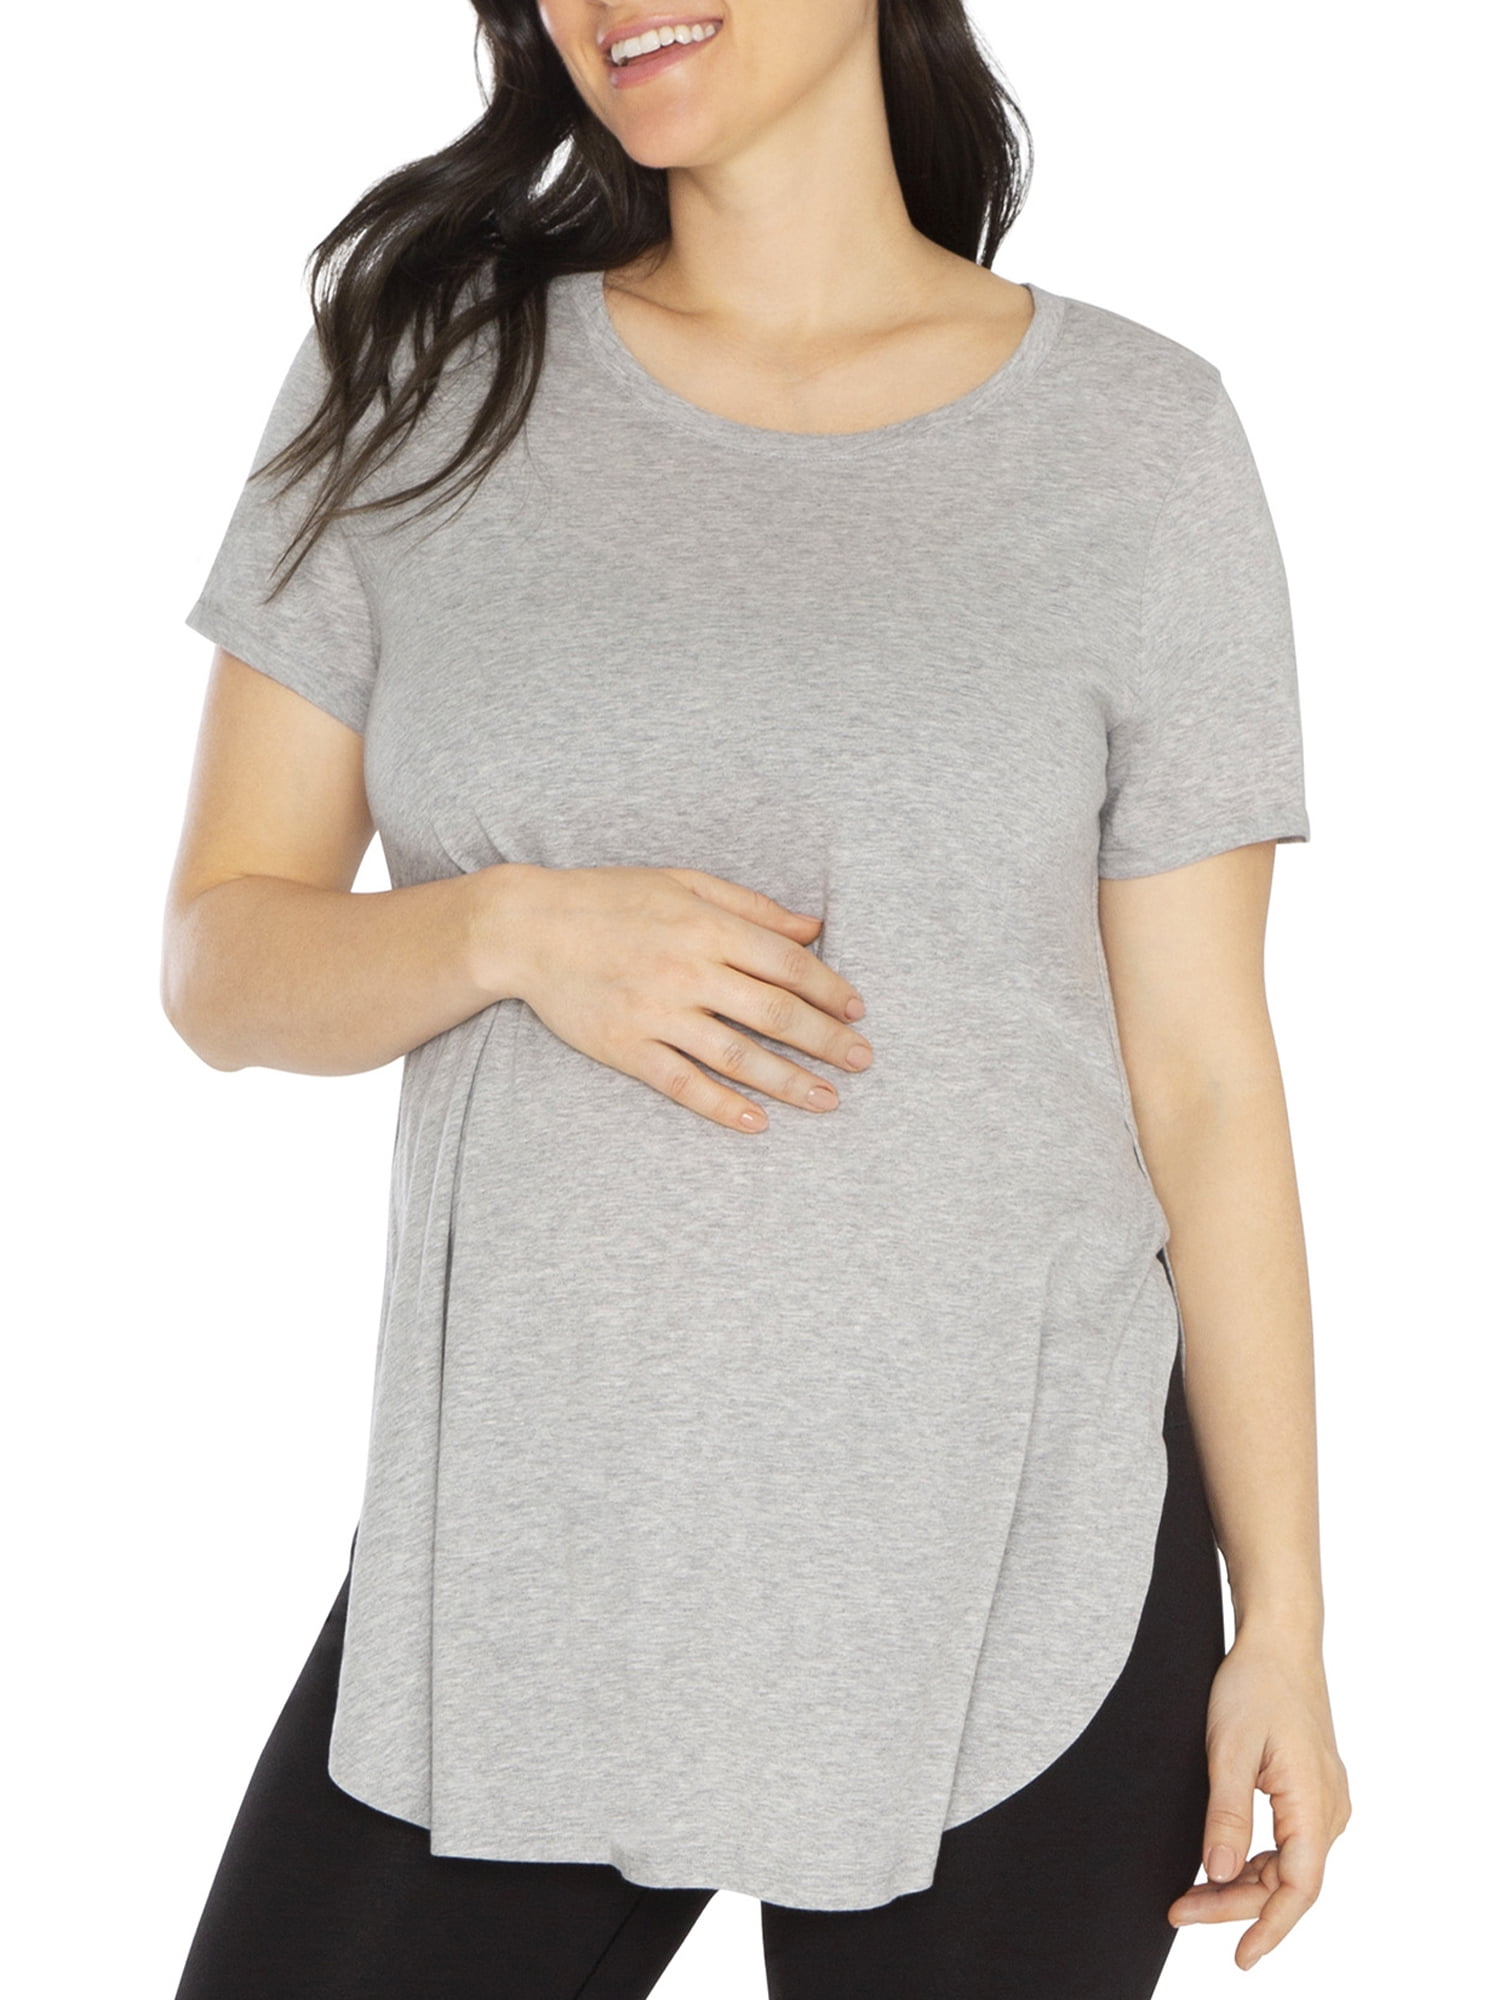 Women Breastfeeding Tee Nursing Tops Splicing Short Sleeve Maternity T-Shirt Size:M, Blue 